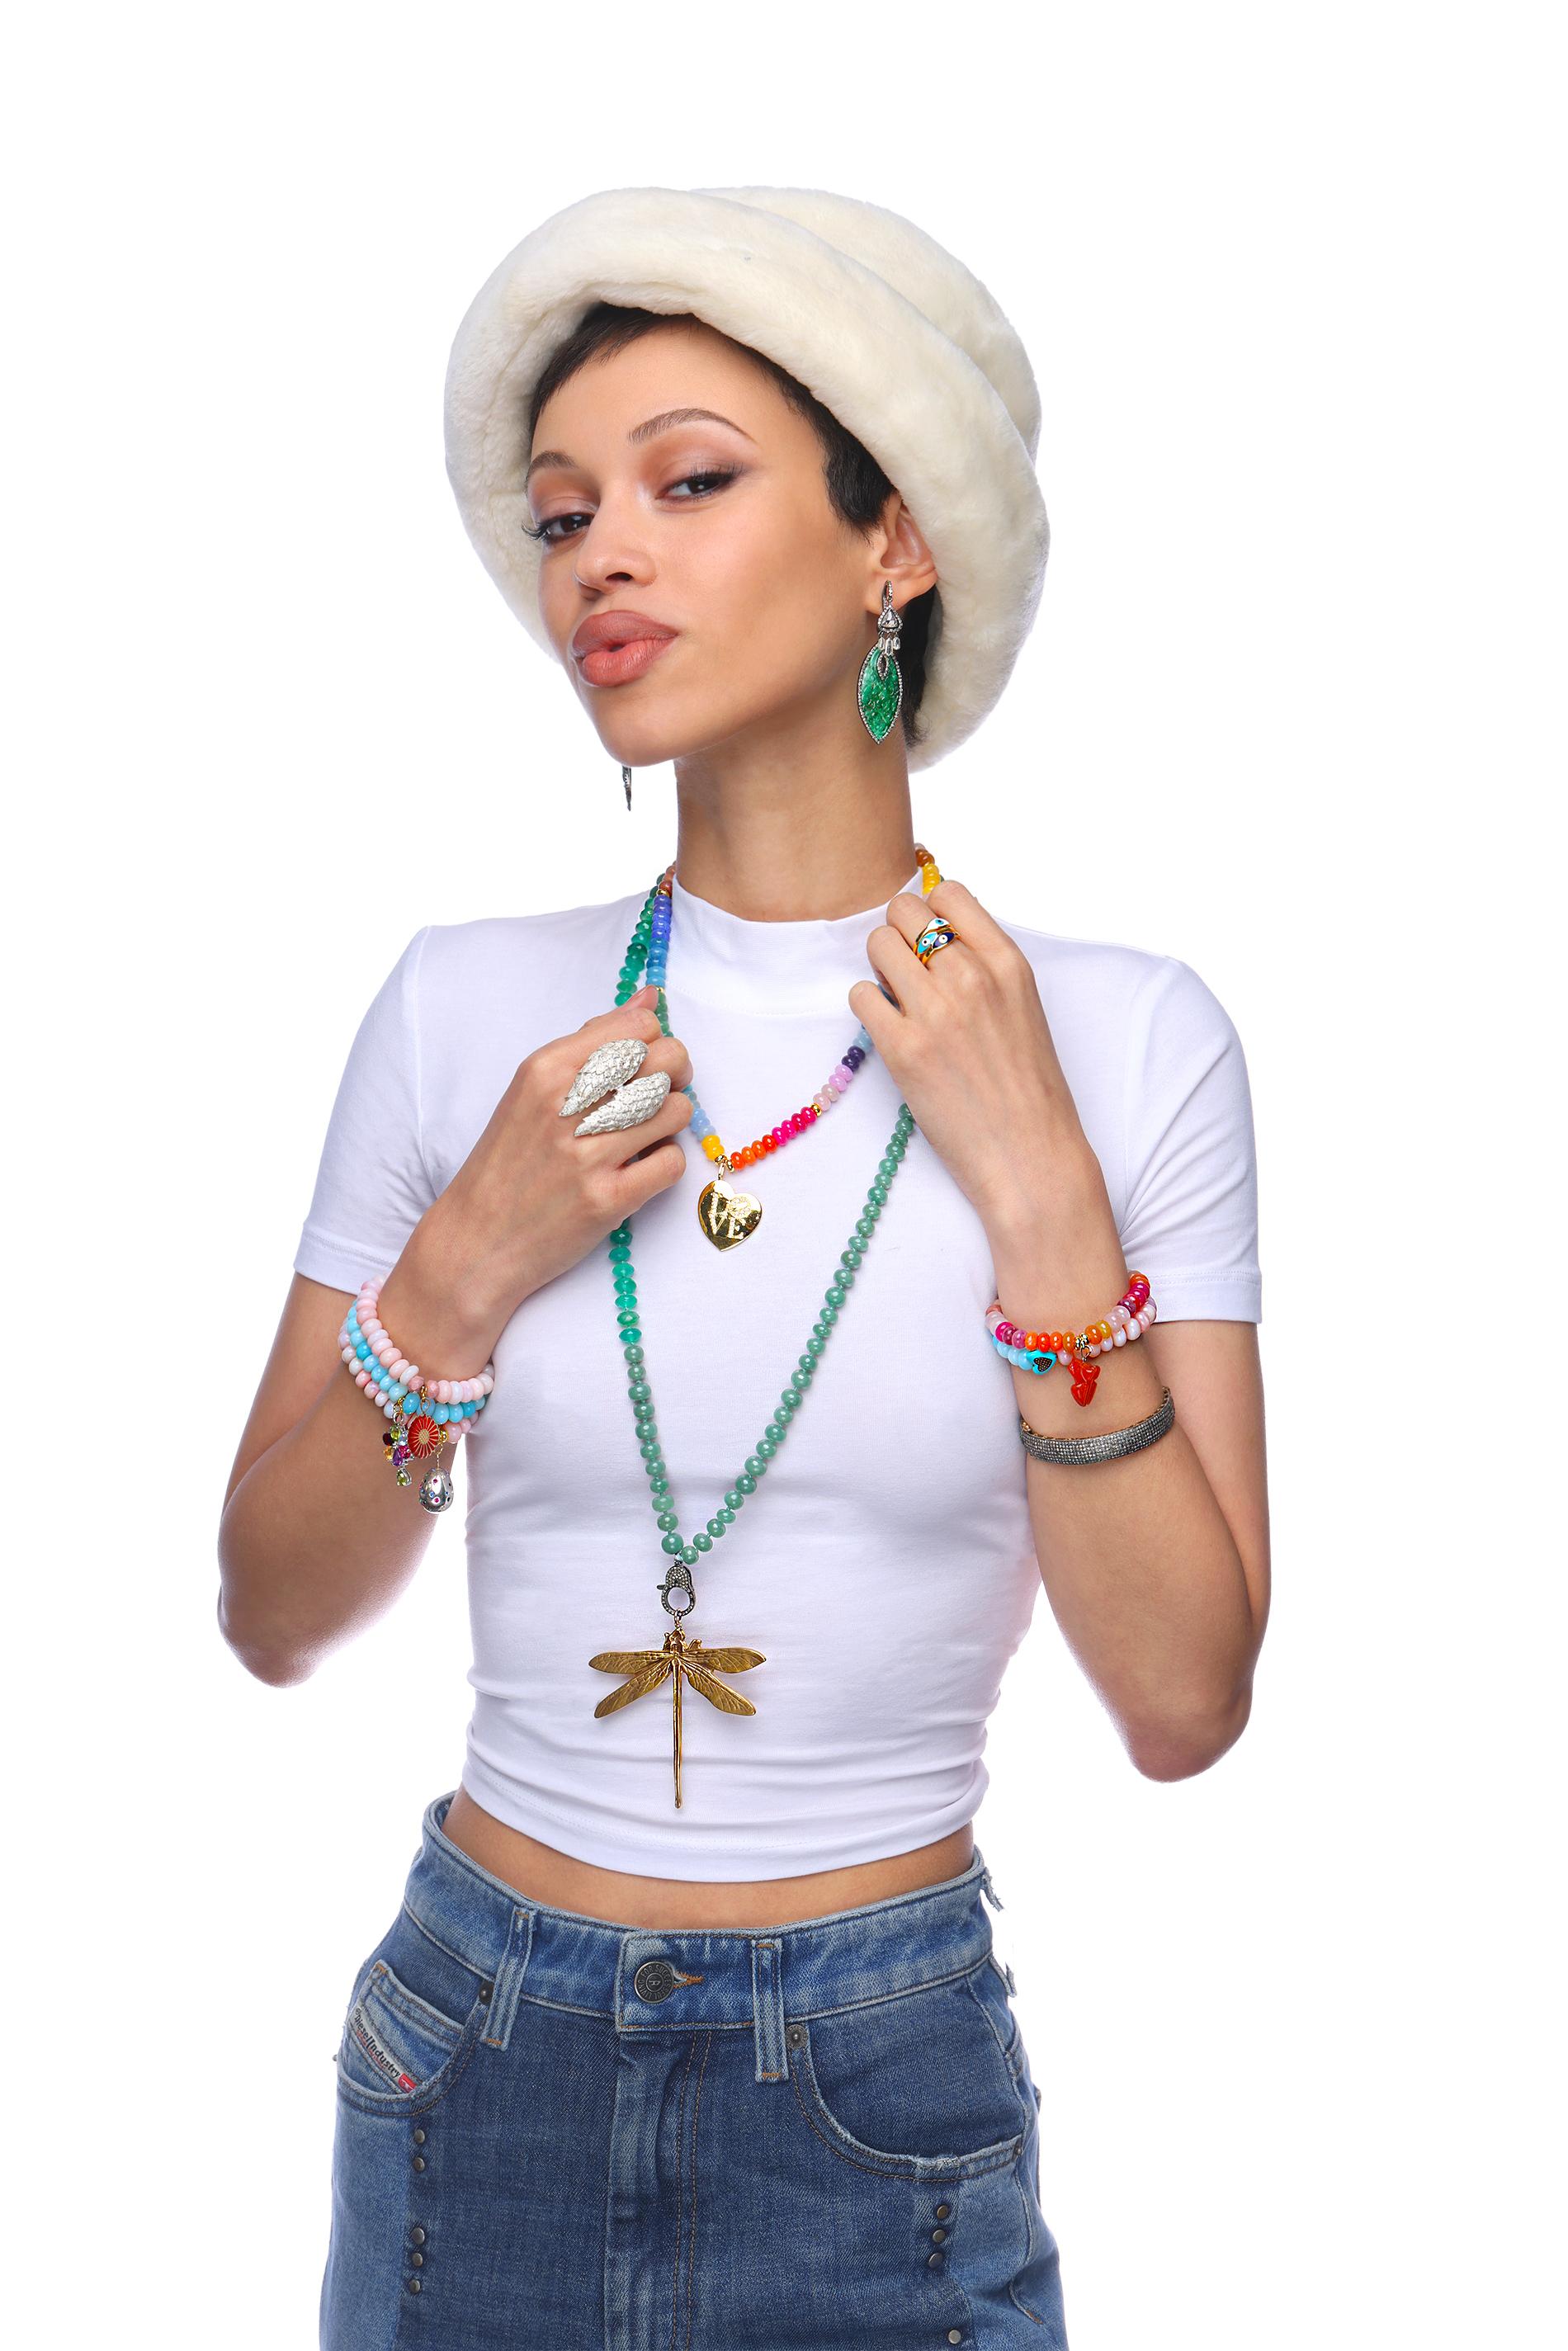 Mixed Cut Clarissa Bronfman TUTTI Cotton Candy Love Heart Multi Color Necklace For Sale